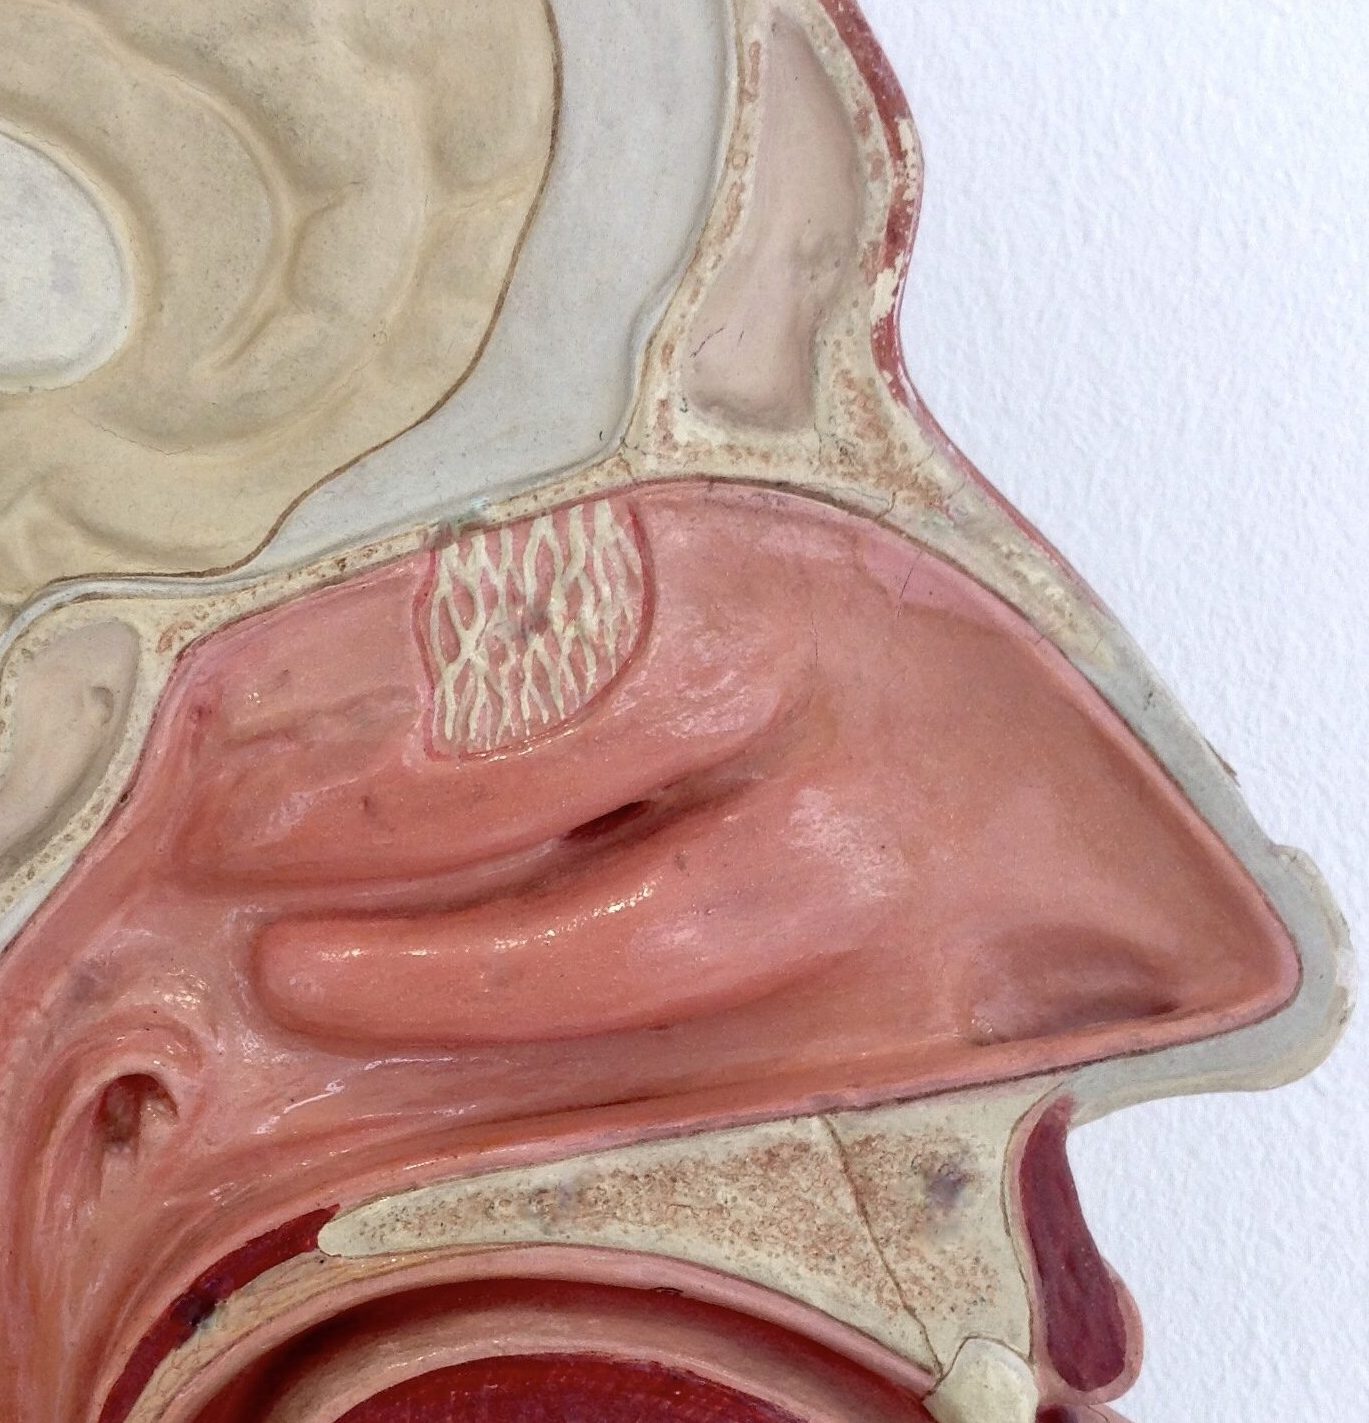 Anatomie Nase